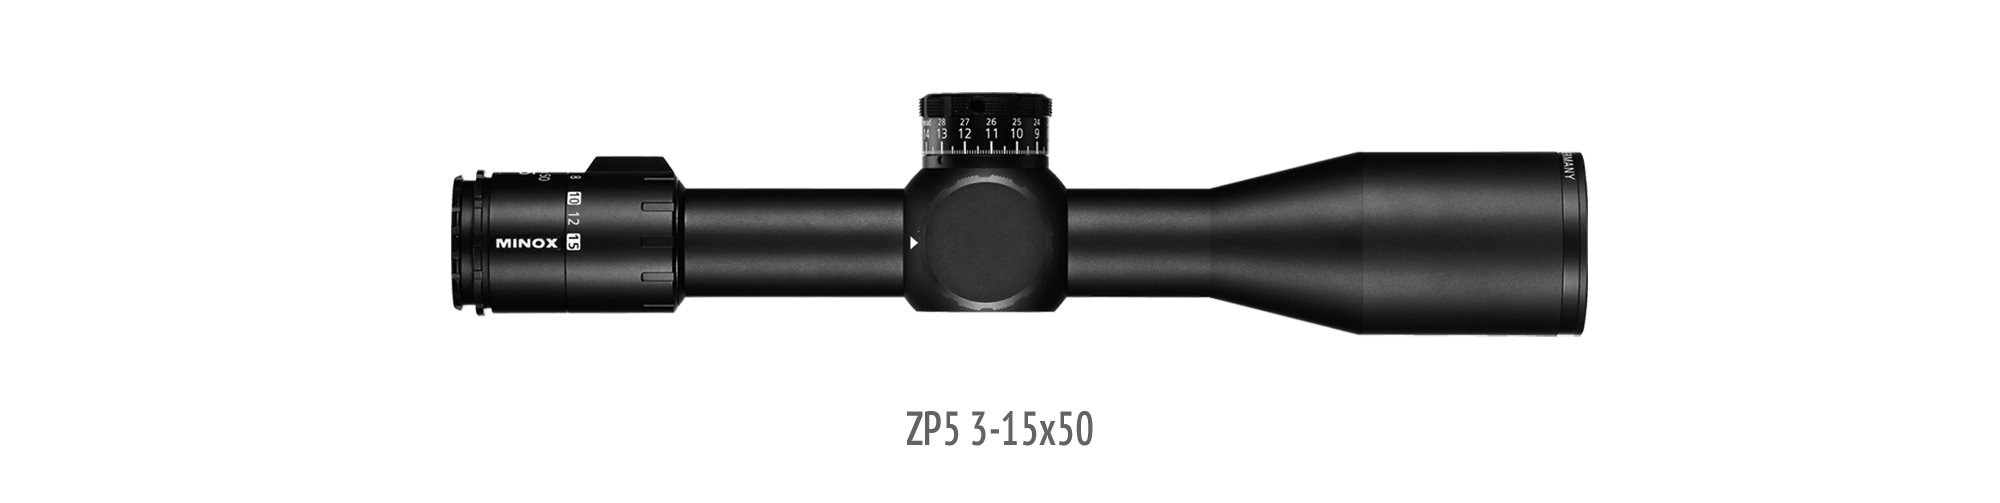 MINOX Riflescopes PRO ZP5 3-15x50